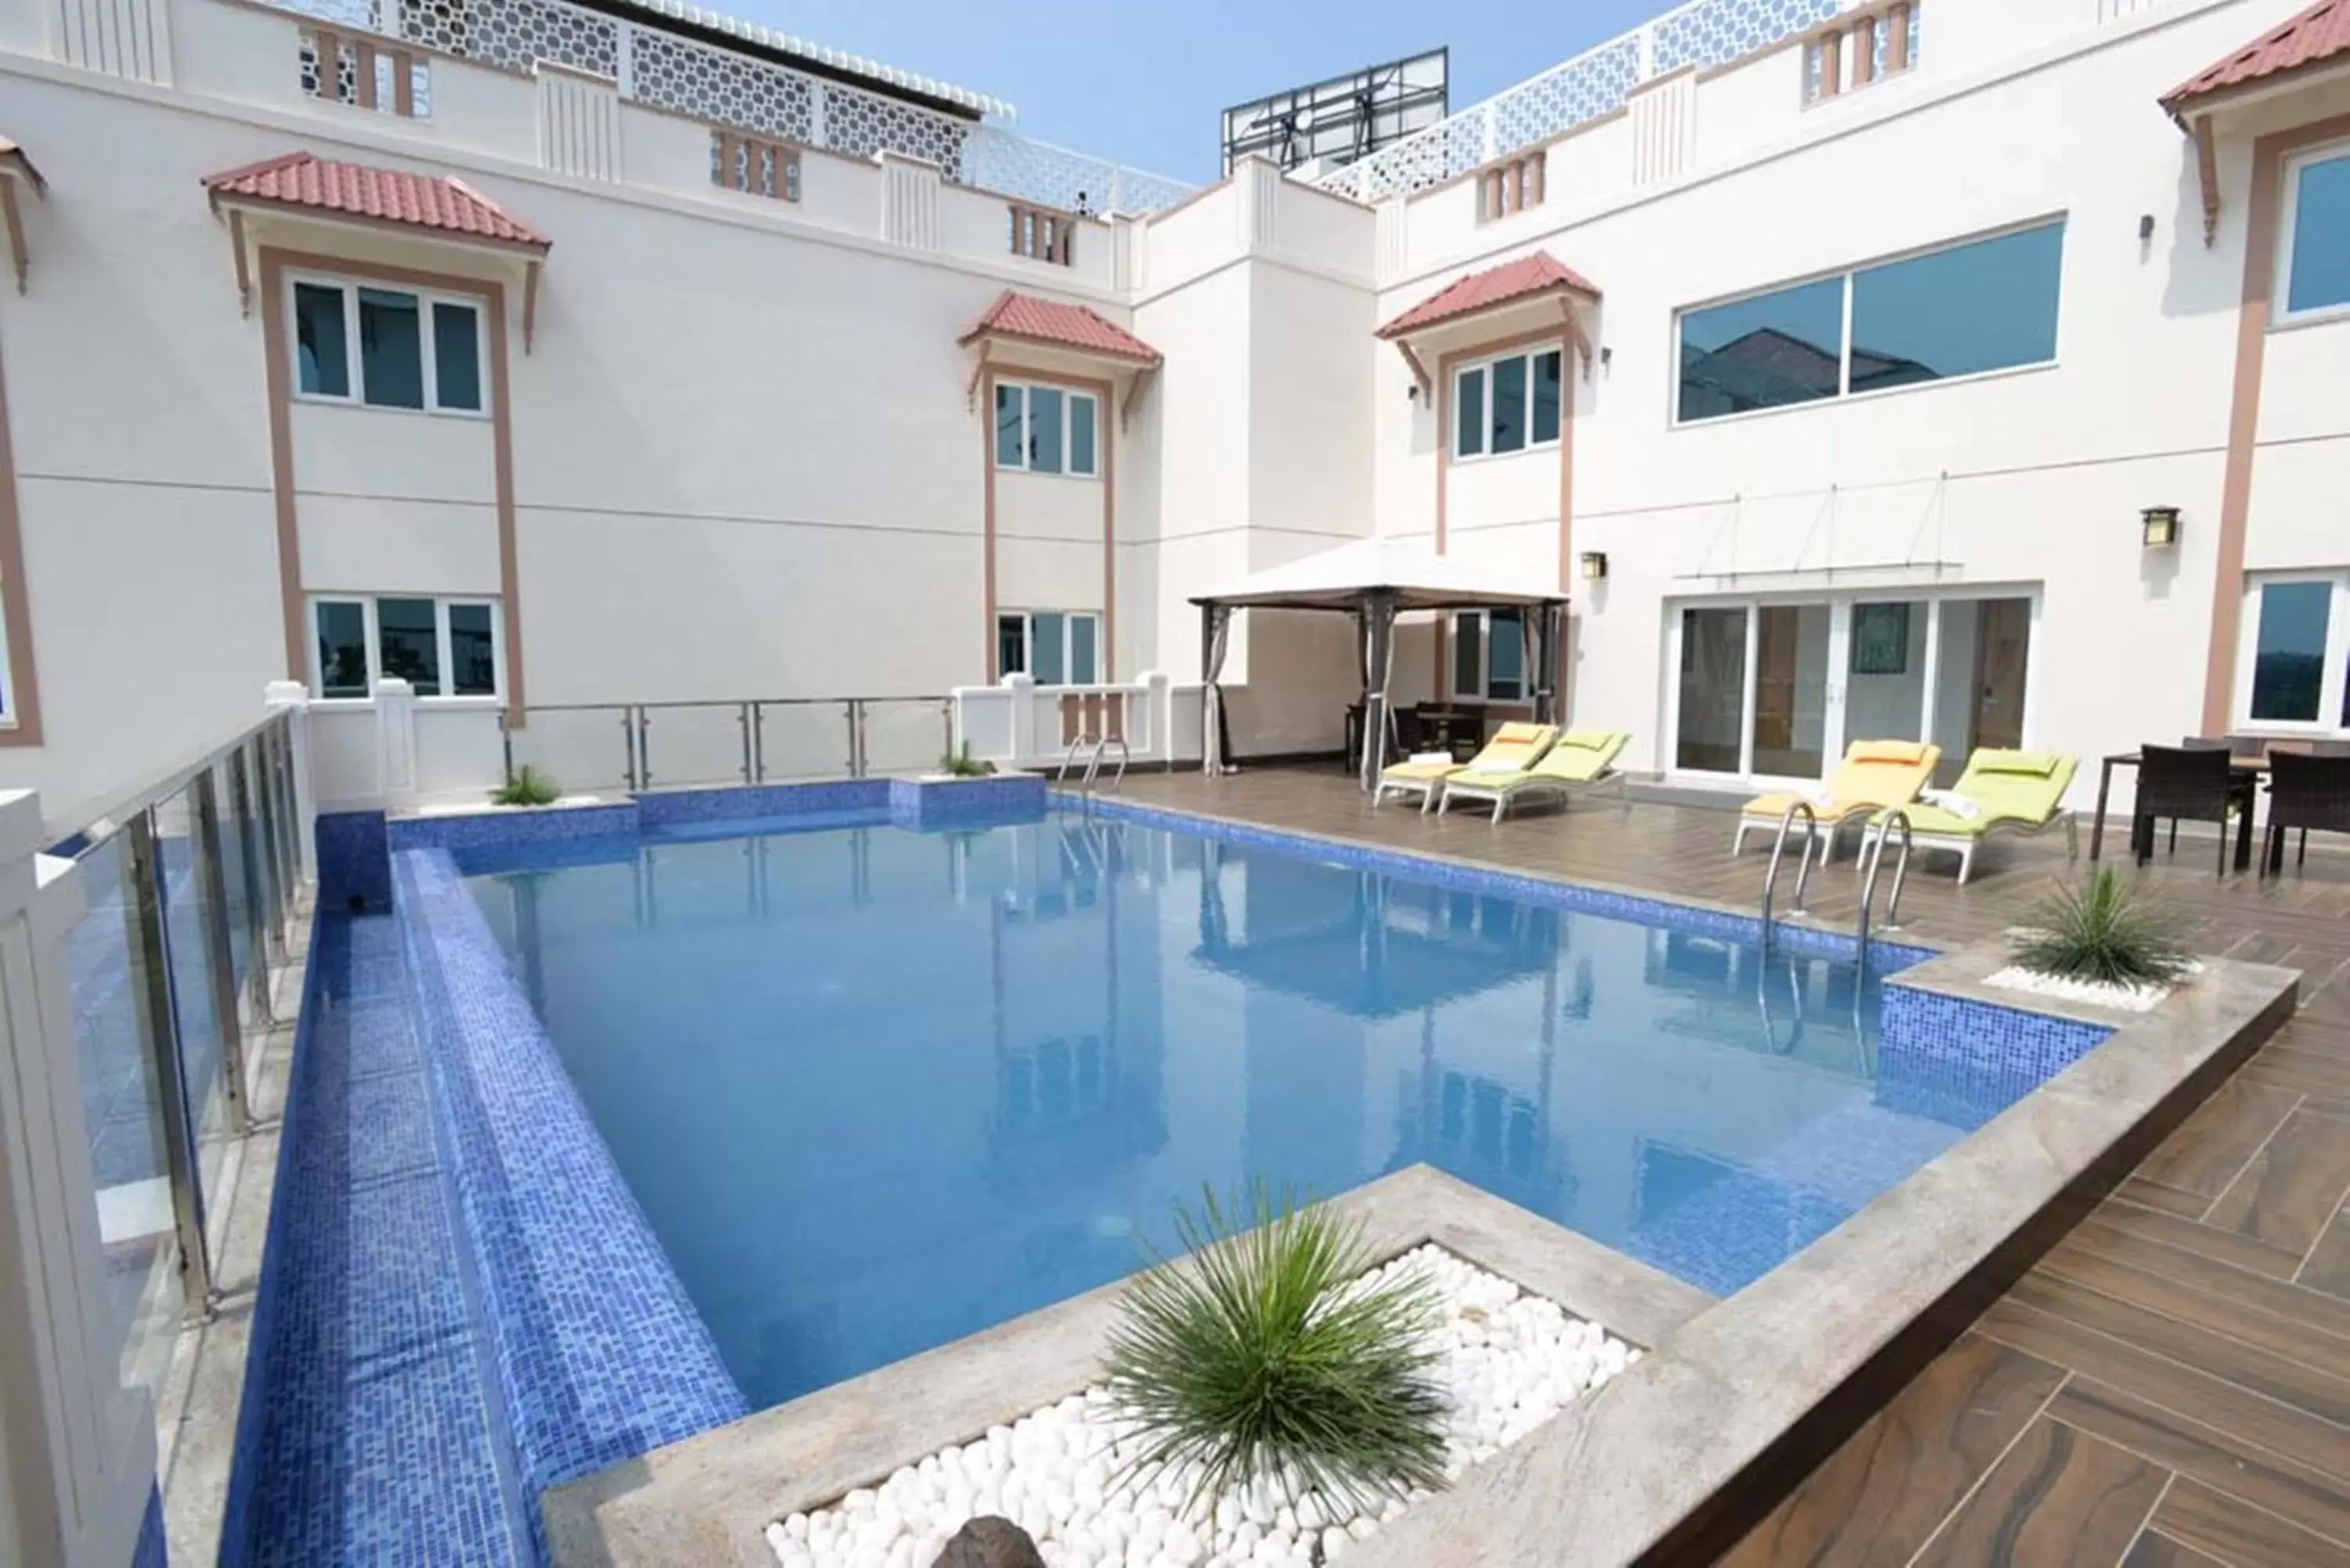 Swimming Pool in Lemon Tree Hotel Coimbatore